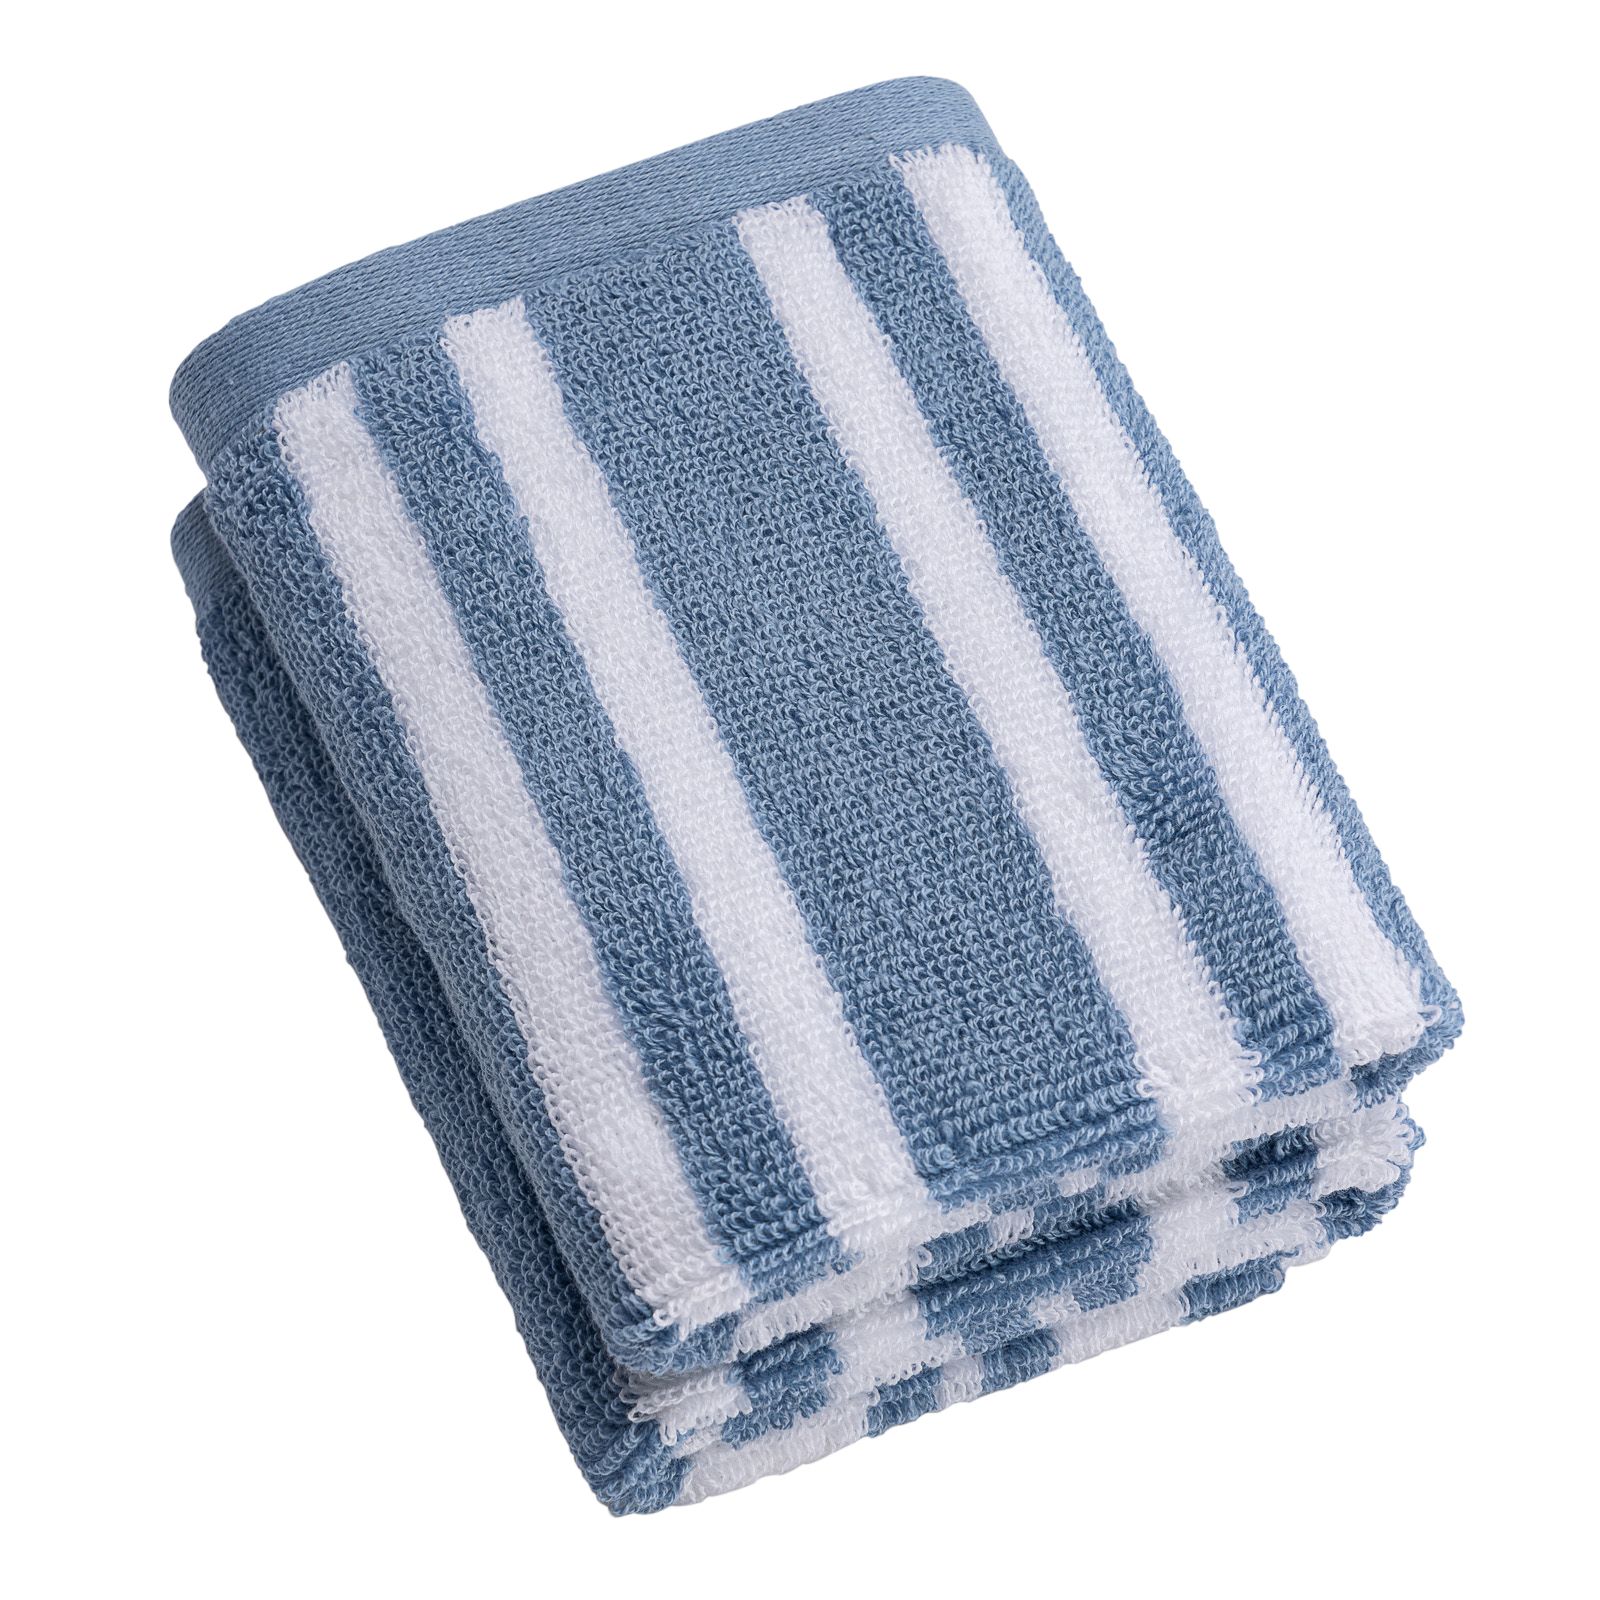 The Clean Store 10 Piece Blue Cotton Bath Towel Set (2 Bath Towels, 2 Hand Towels and 6 Washcloths)